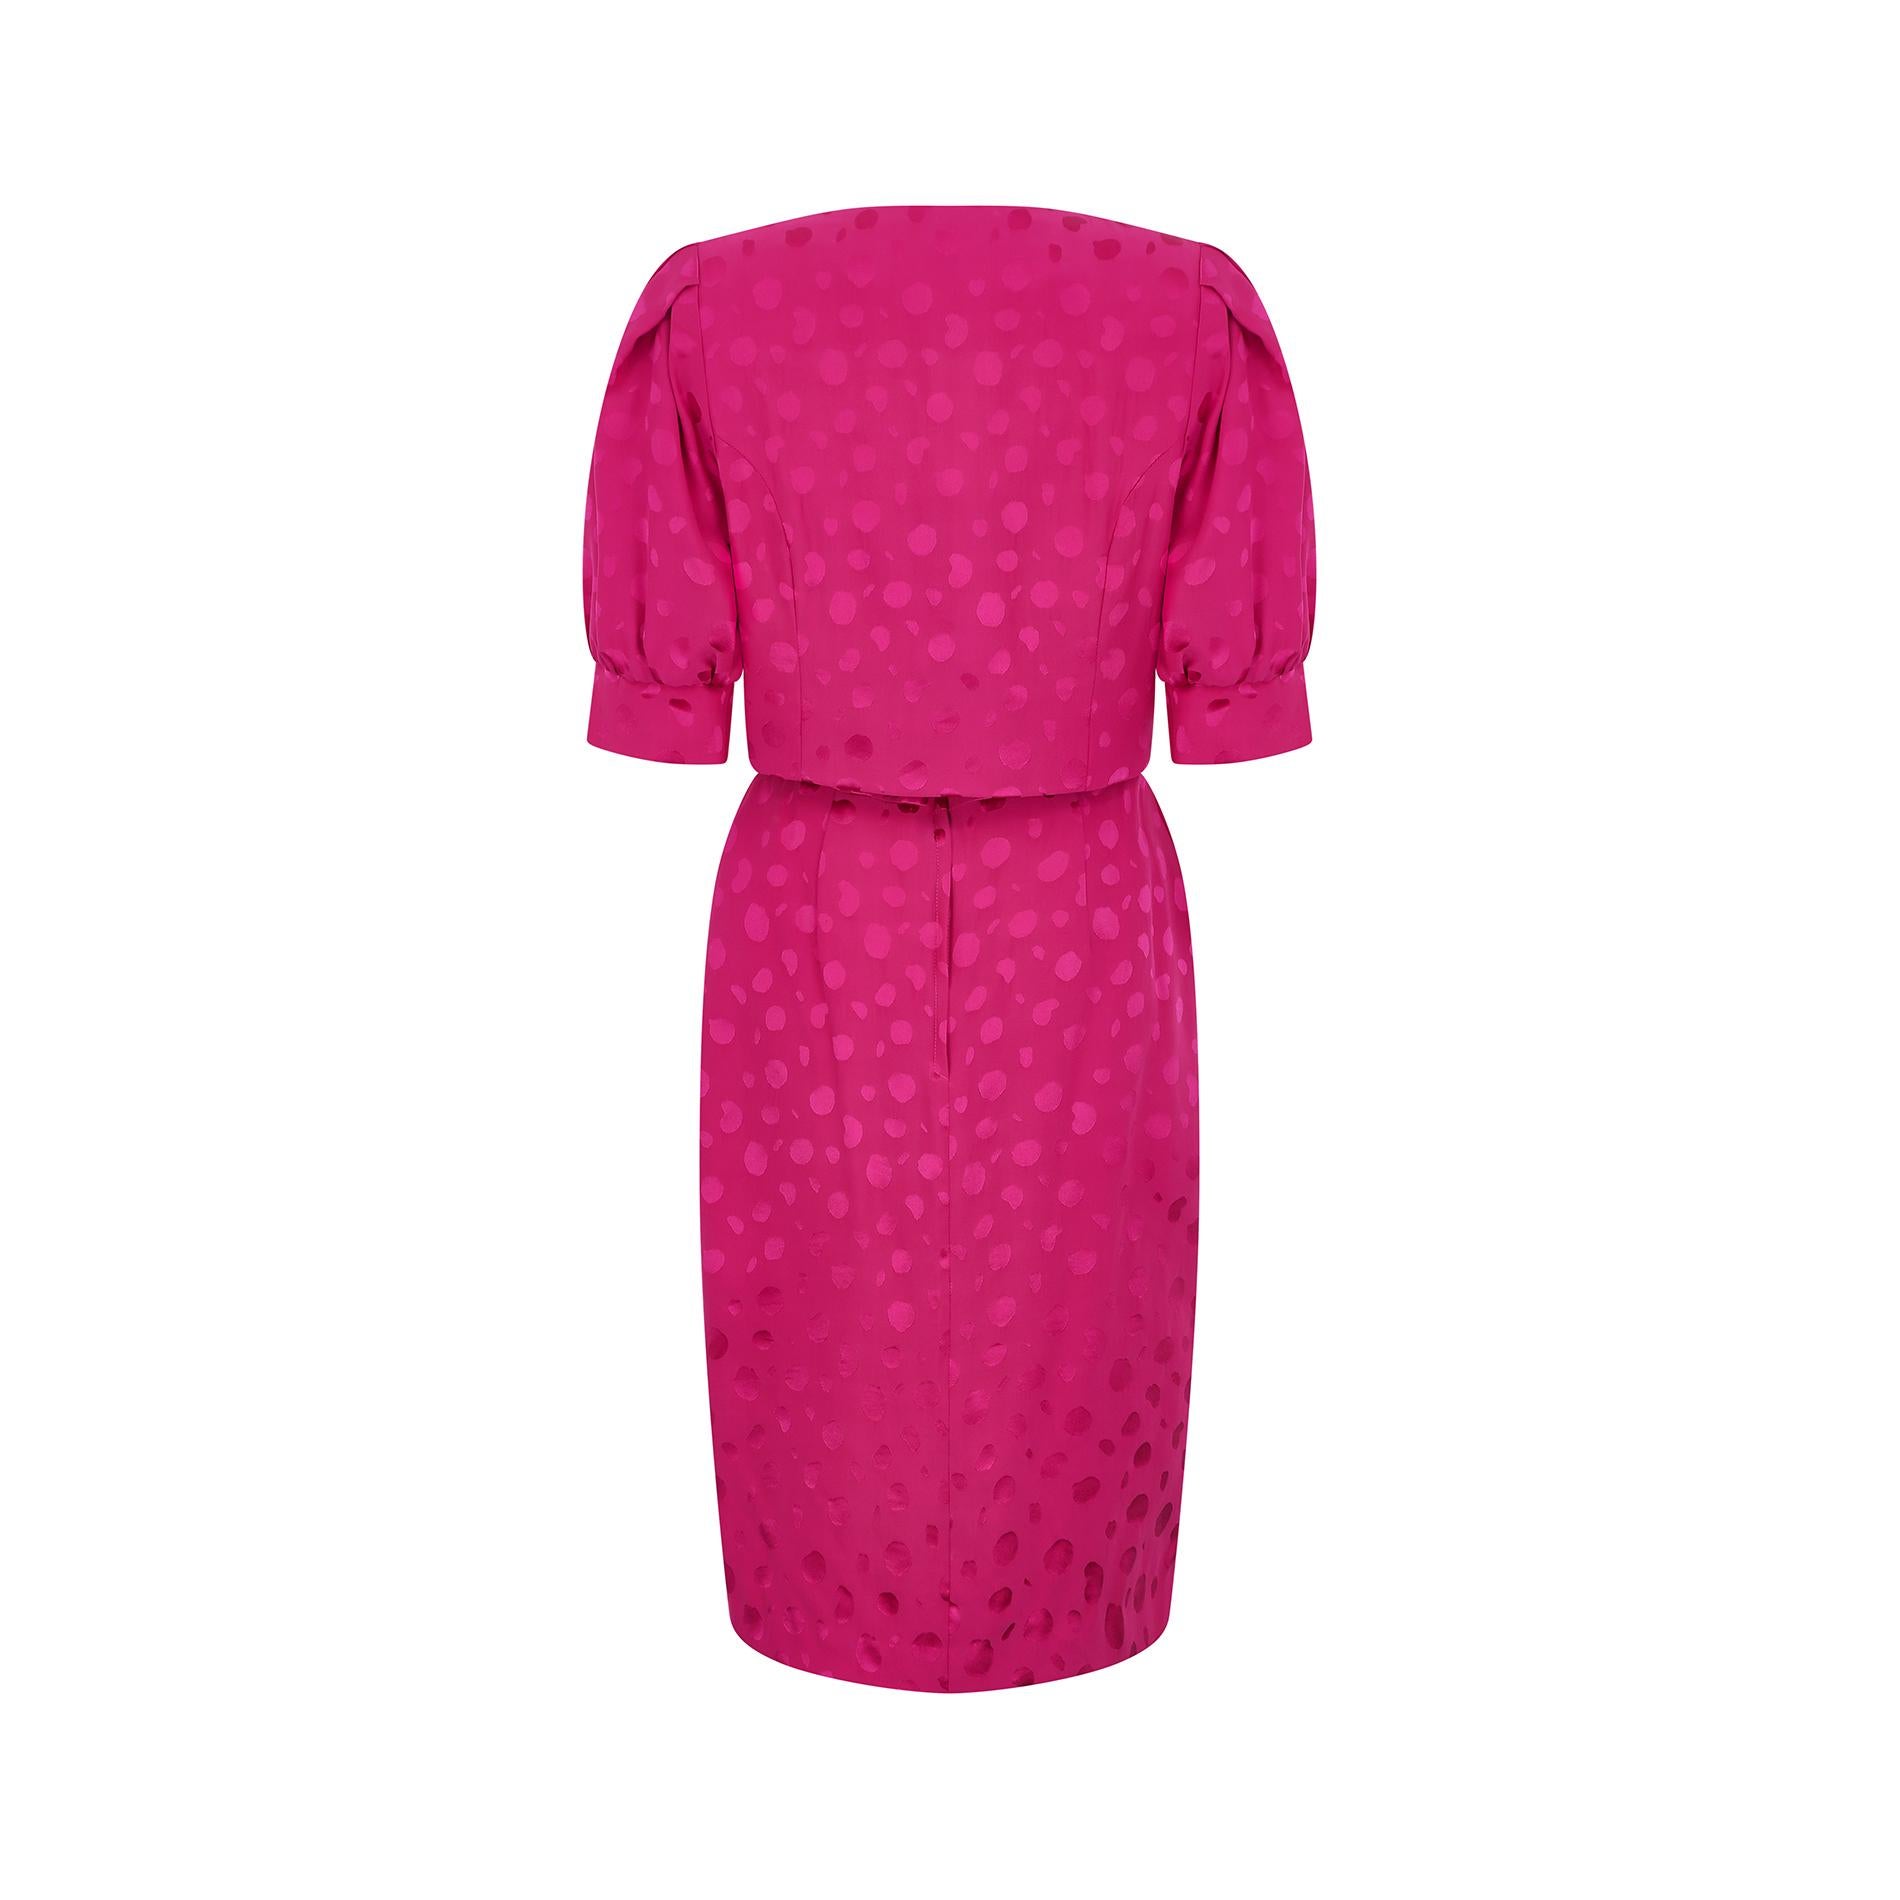 1990s Gail Hoppen Pink Dress Suit with Belt For Sale 1